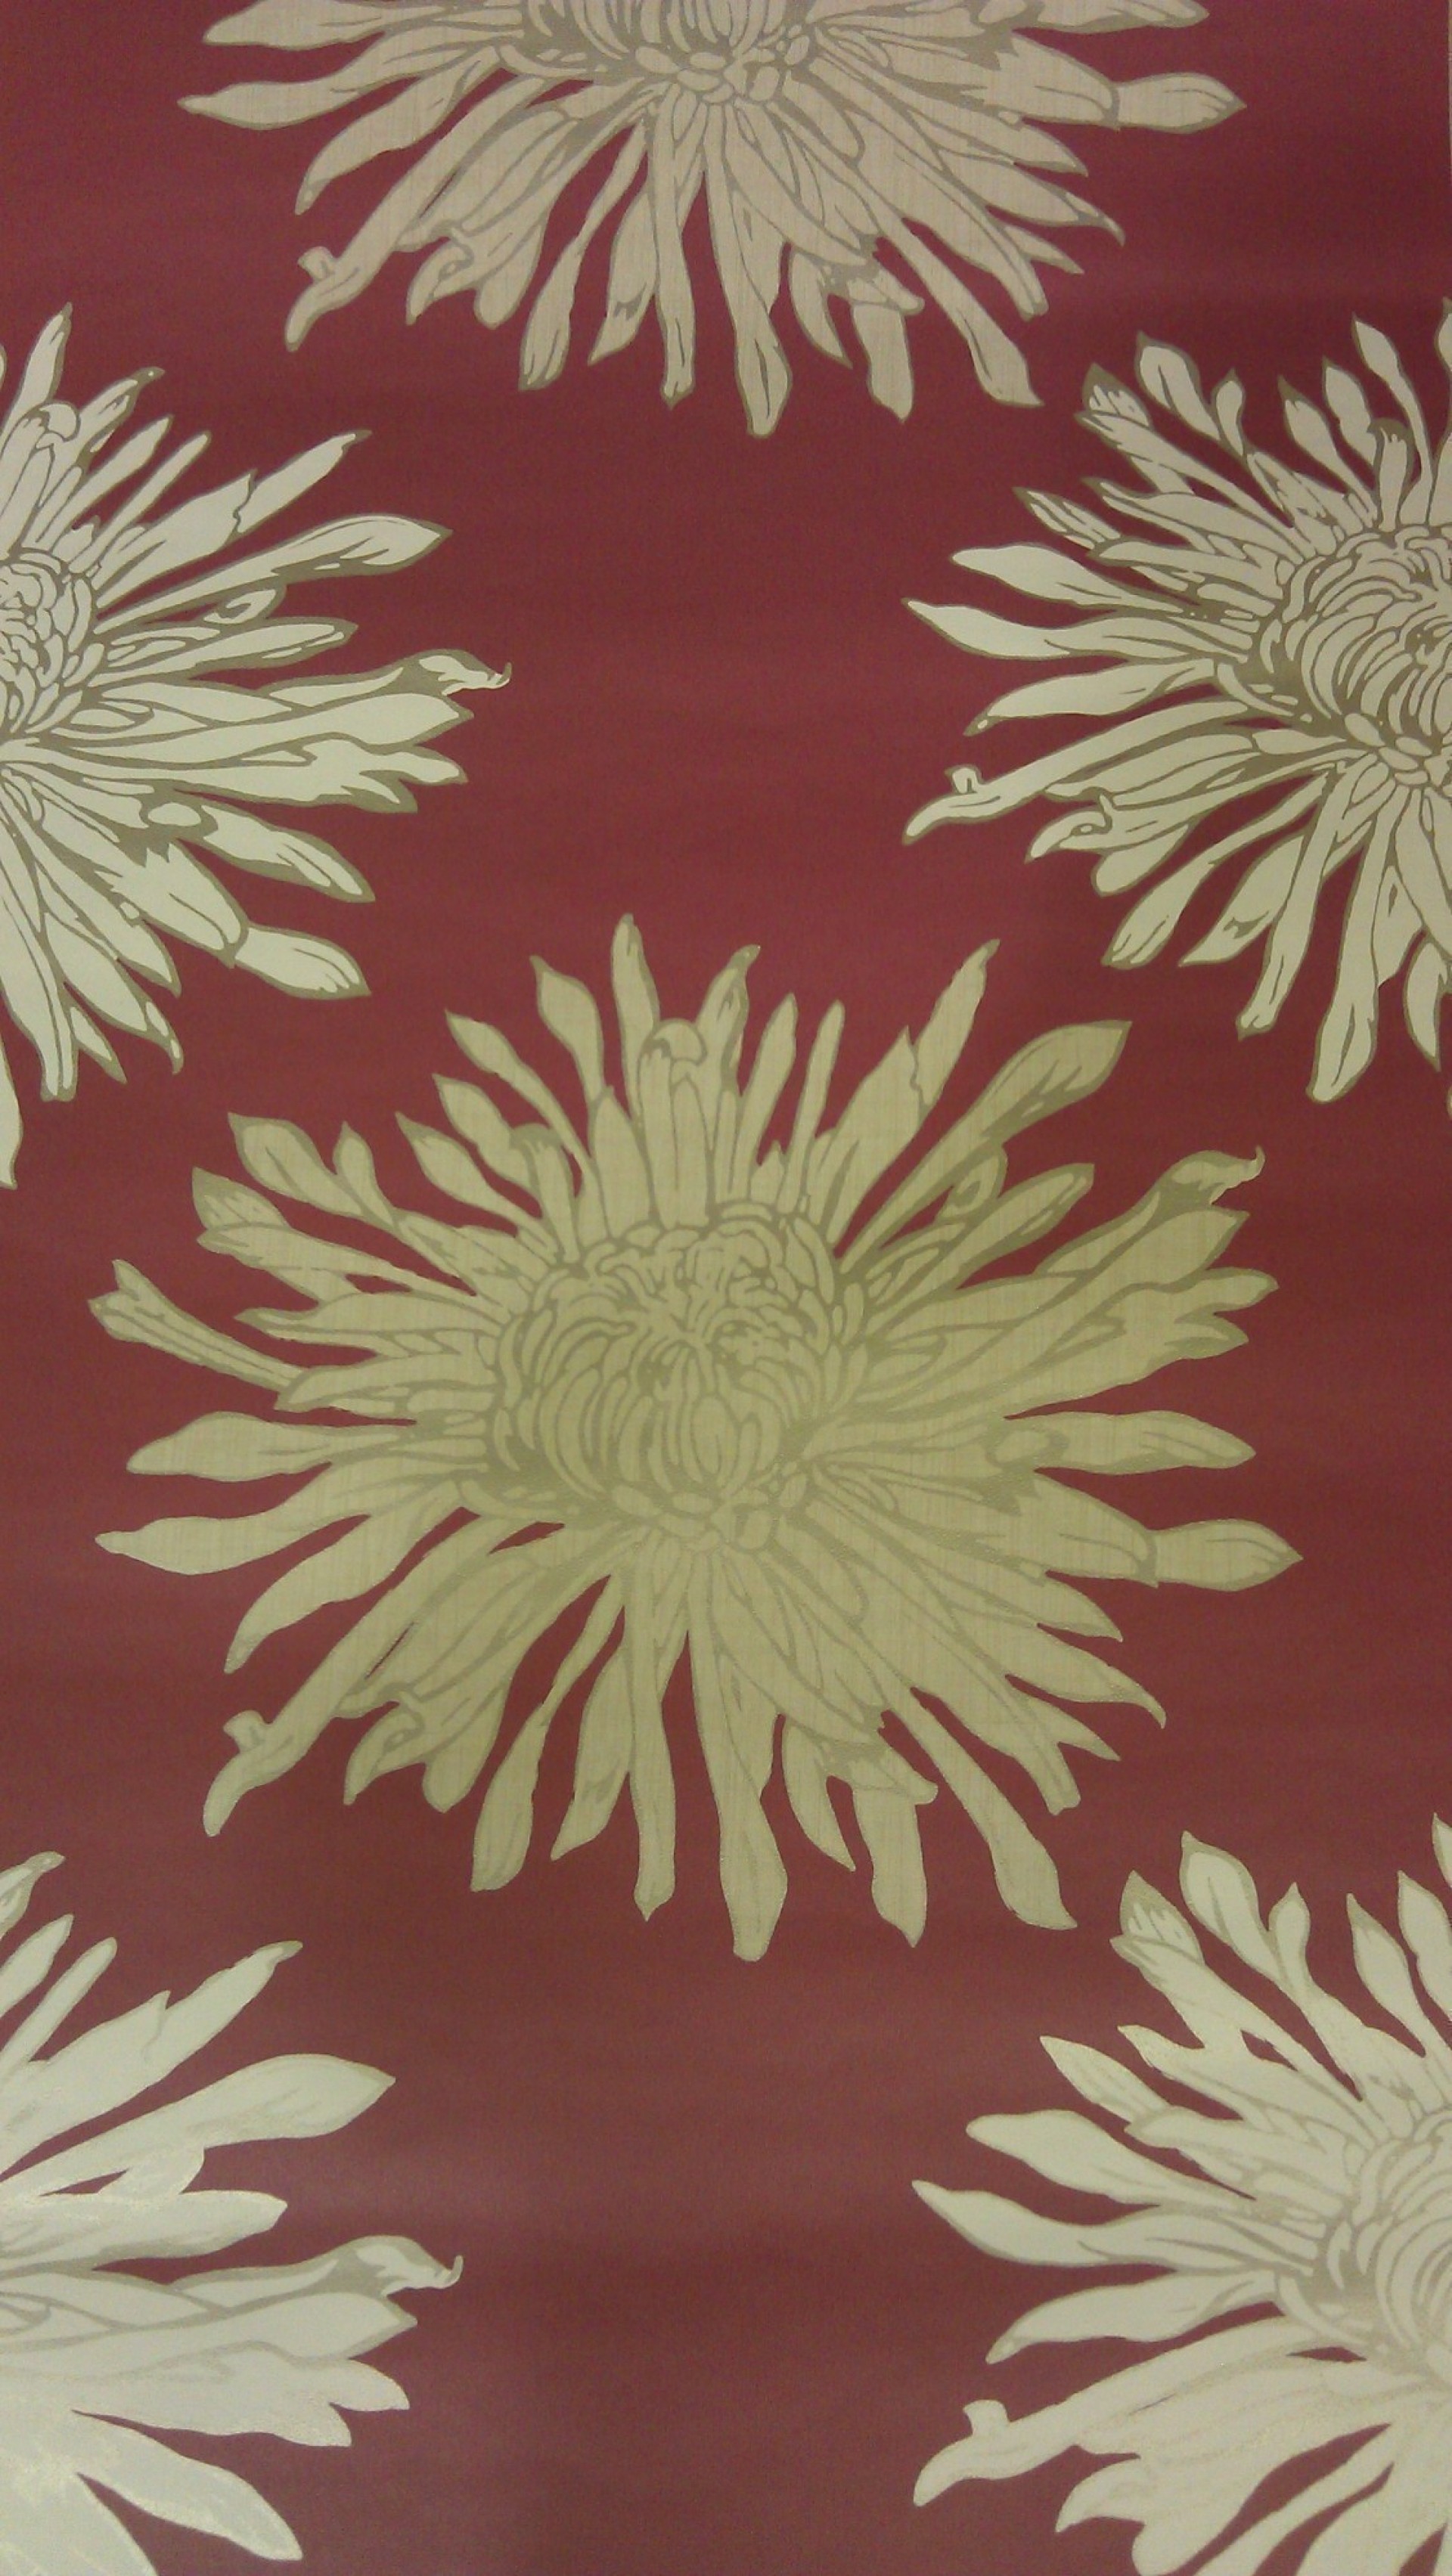 1920x3407 Glam Chrysanthemum Floral Red / Cream / Gold Wallpaper by Rasch 724882